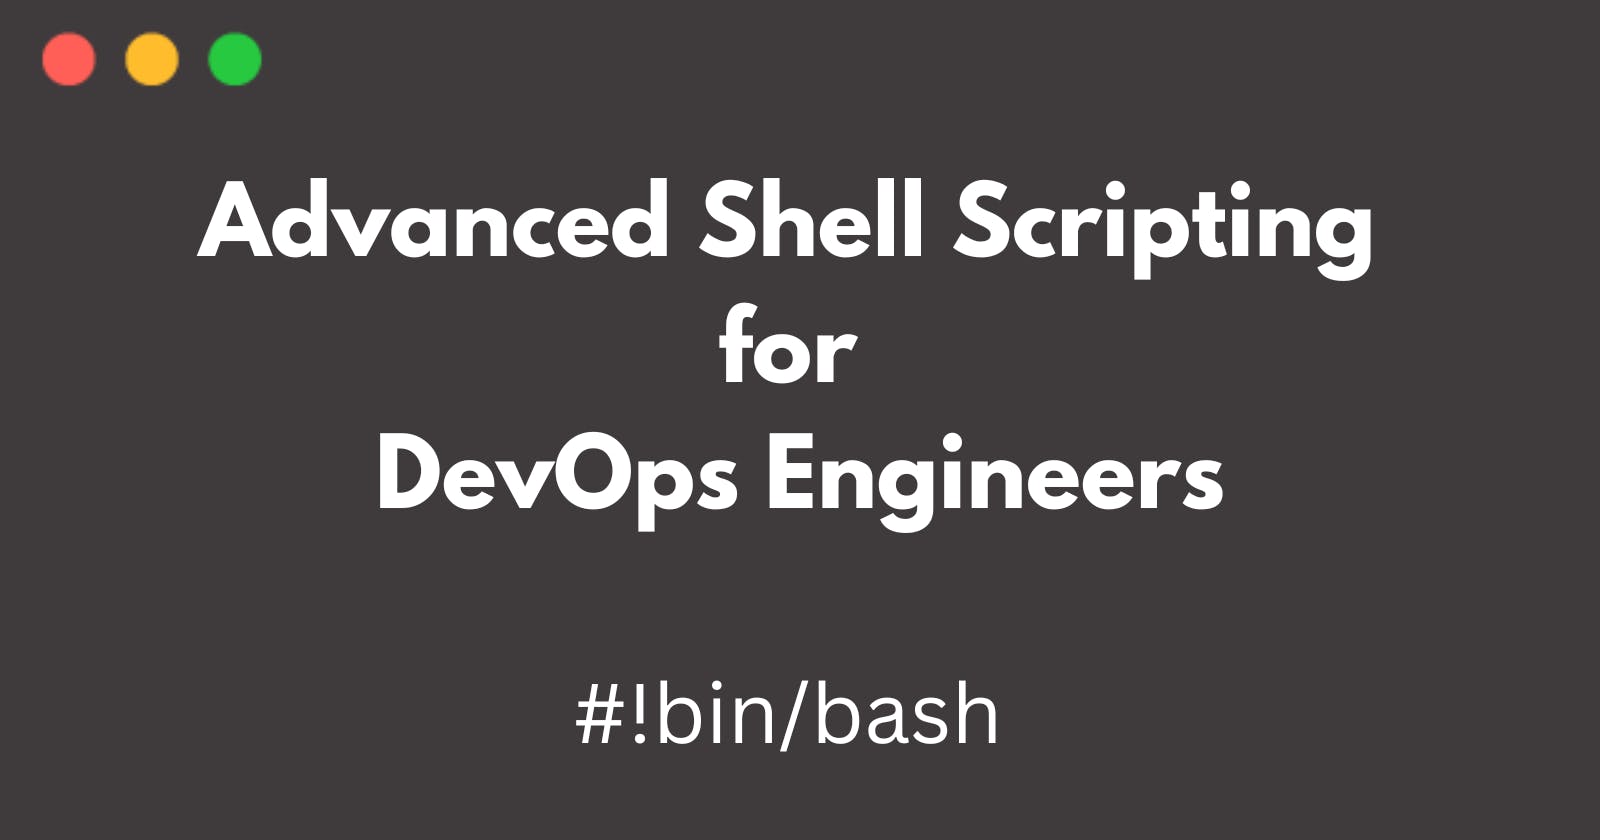 Day 5 Task:  Advanced Linux Shell Scripting for DevOps Engineers